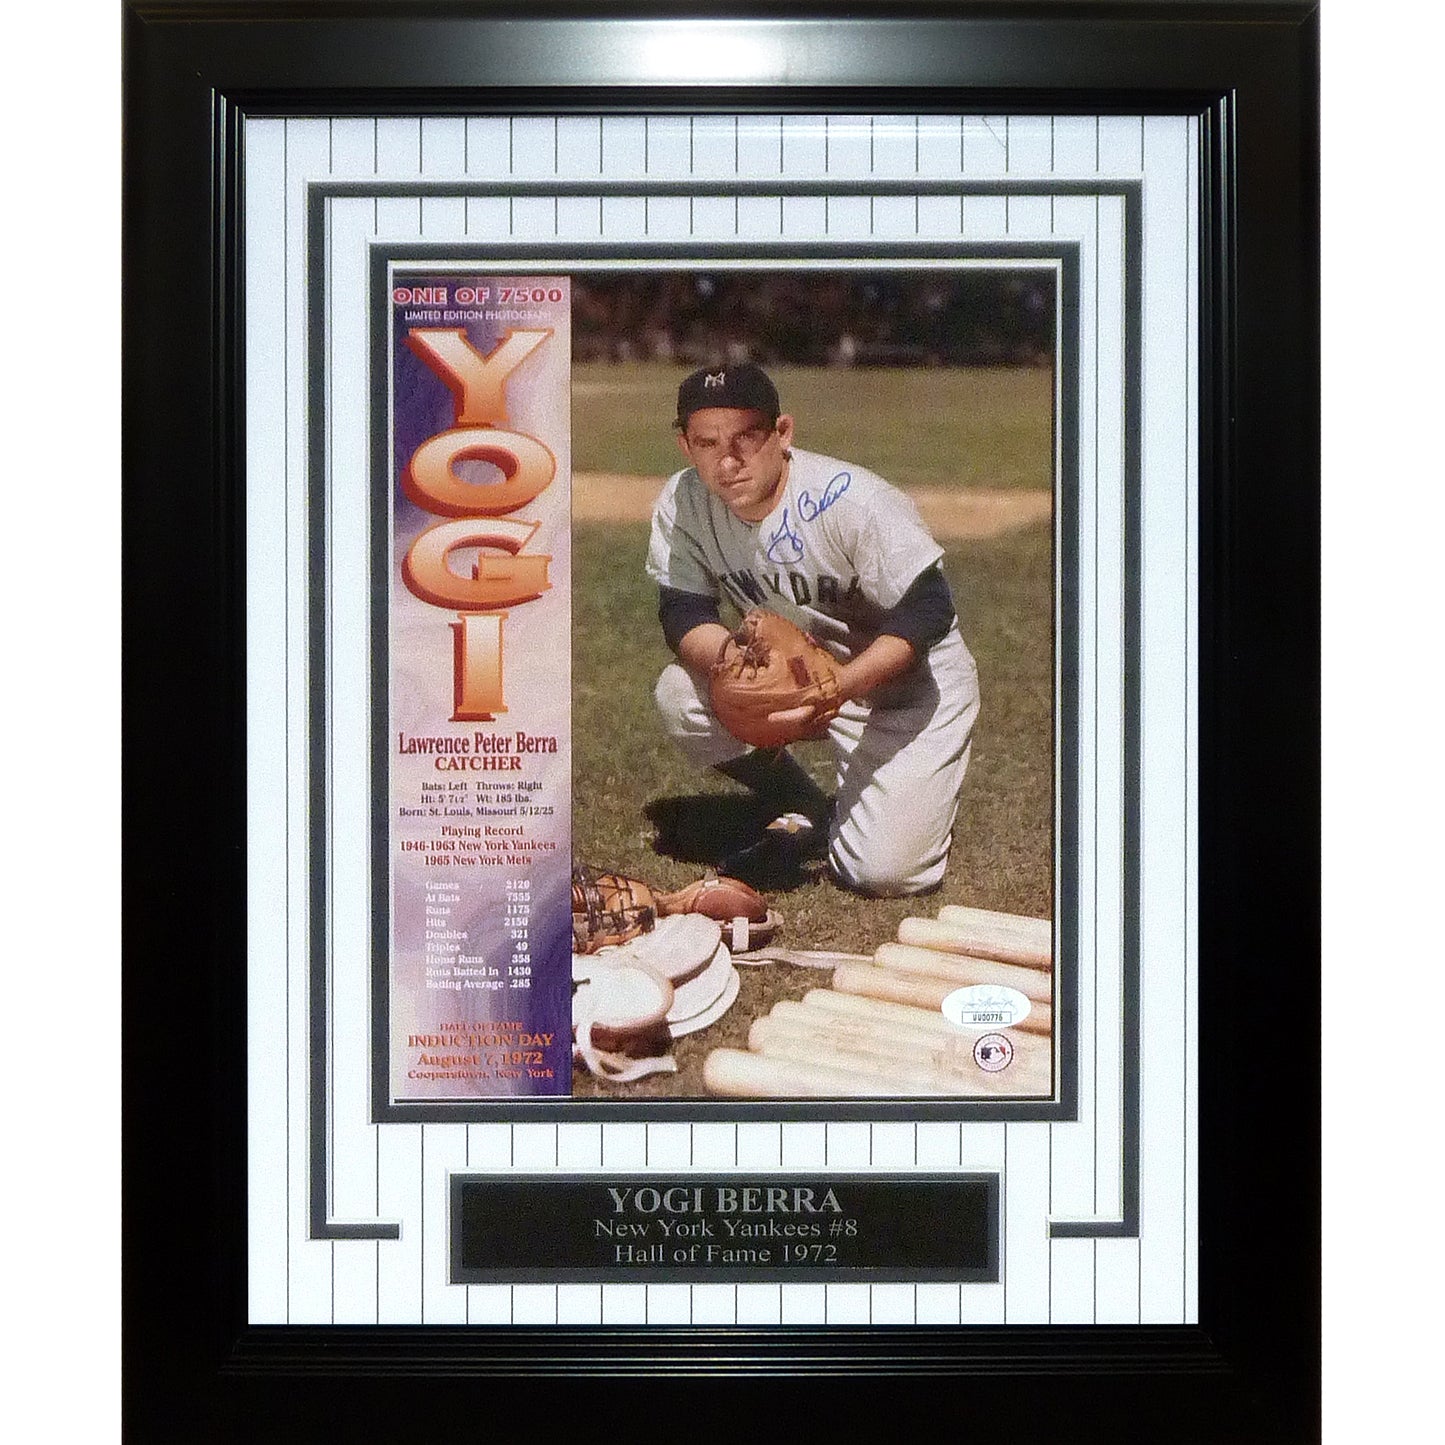 Yogi Berra Autographed New York Yankees Deluxe Framed 8x10 Photo - JSA